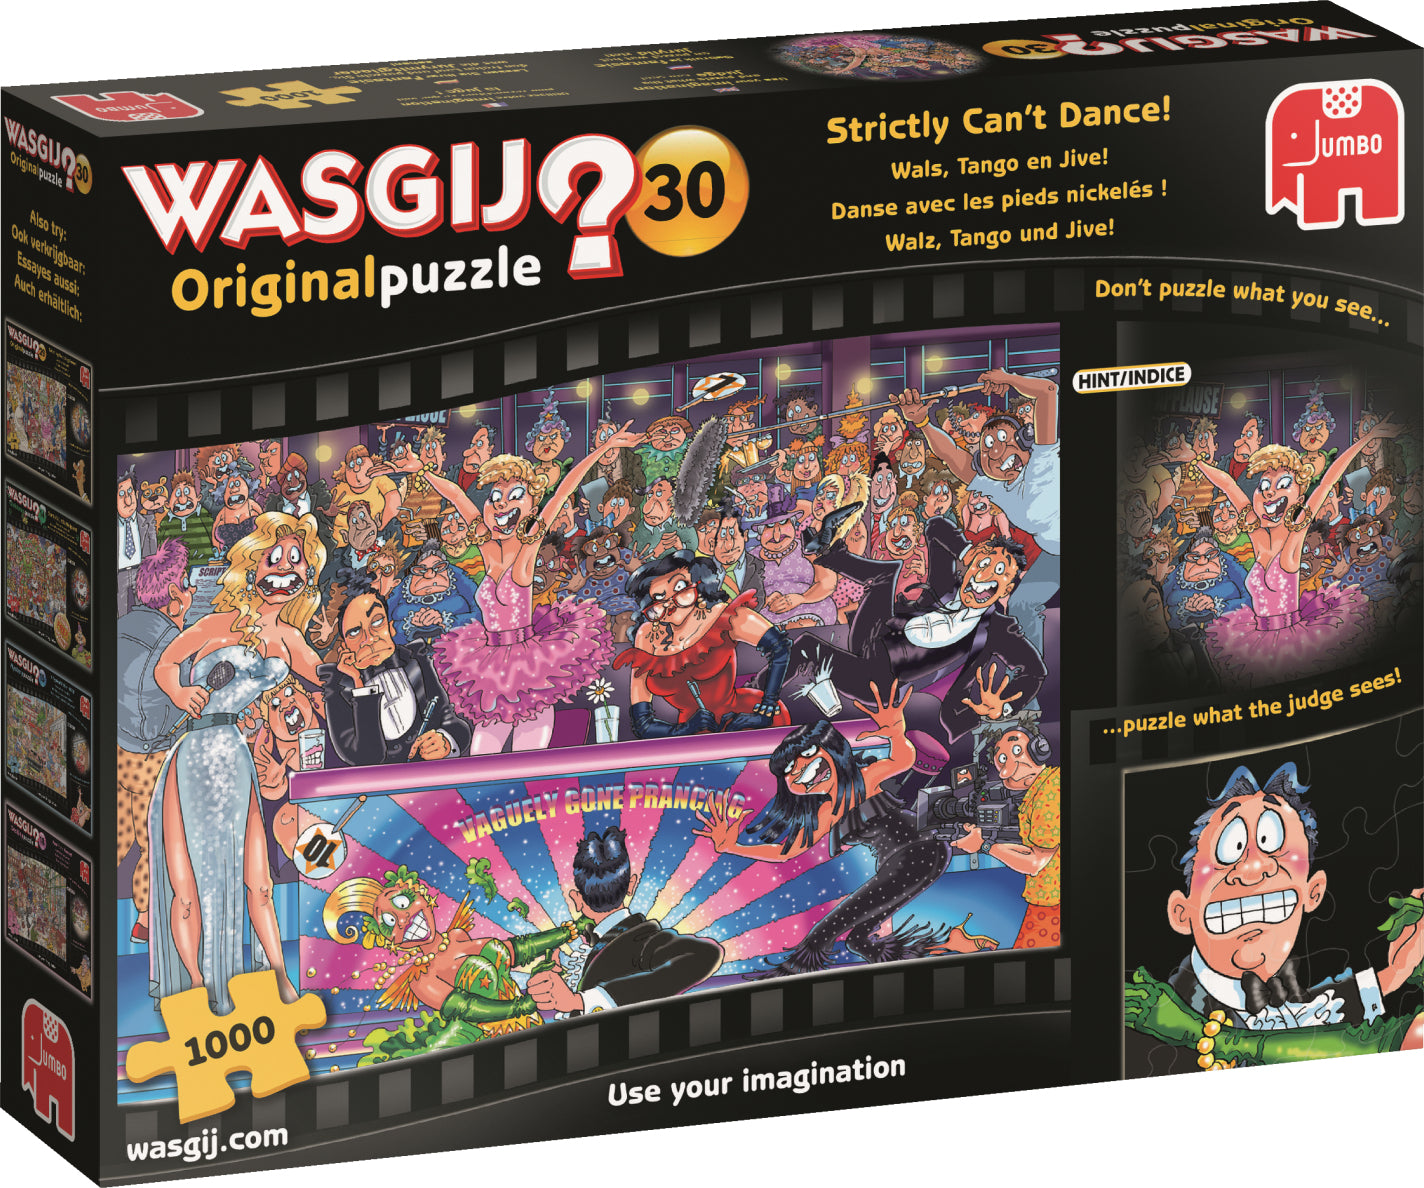 Wasgij Original 30 Strictly